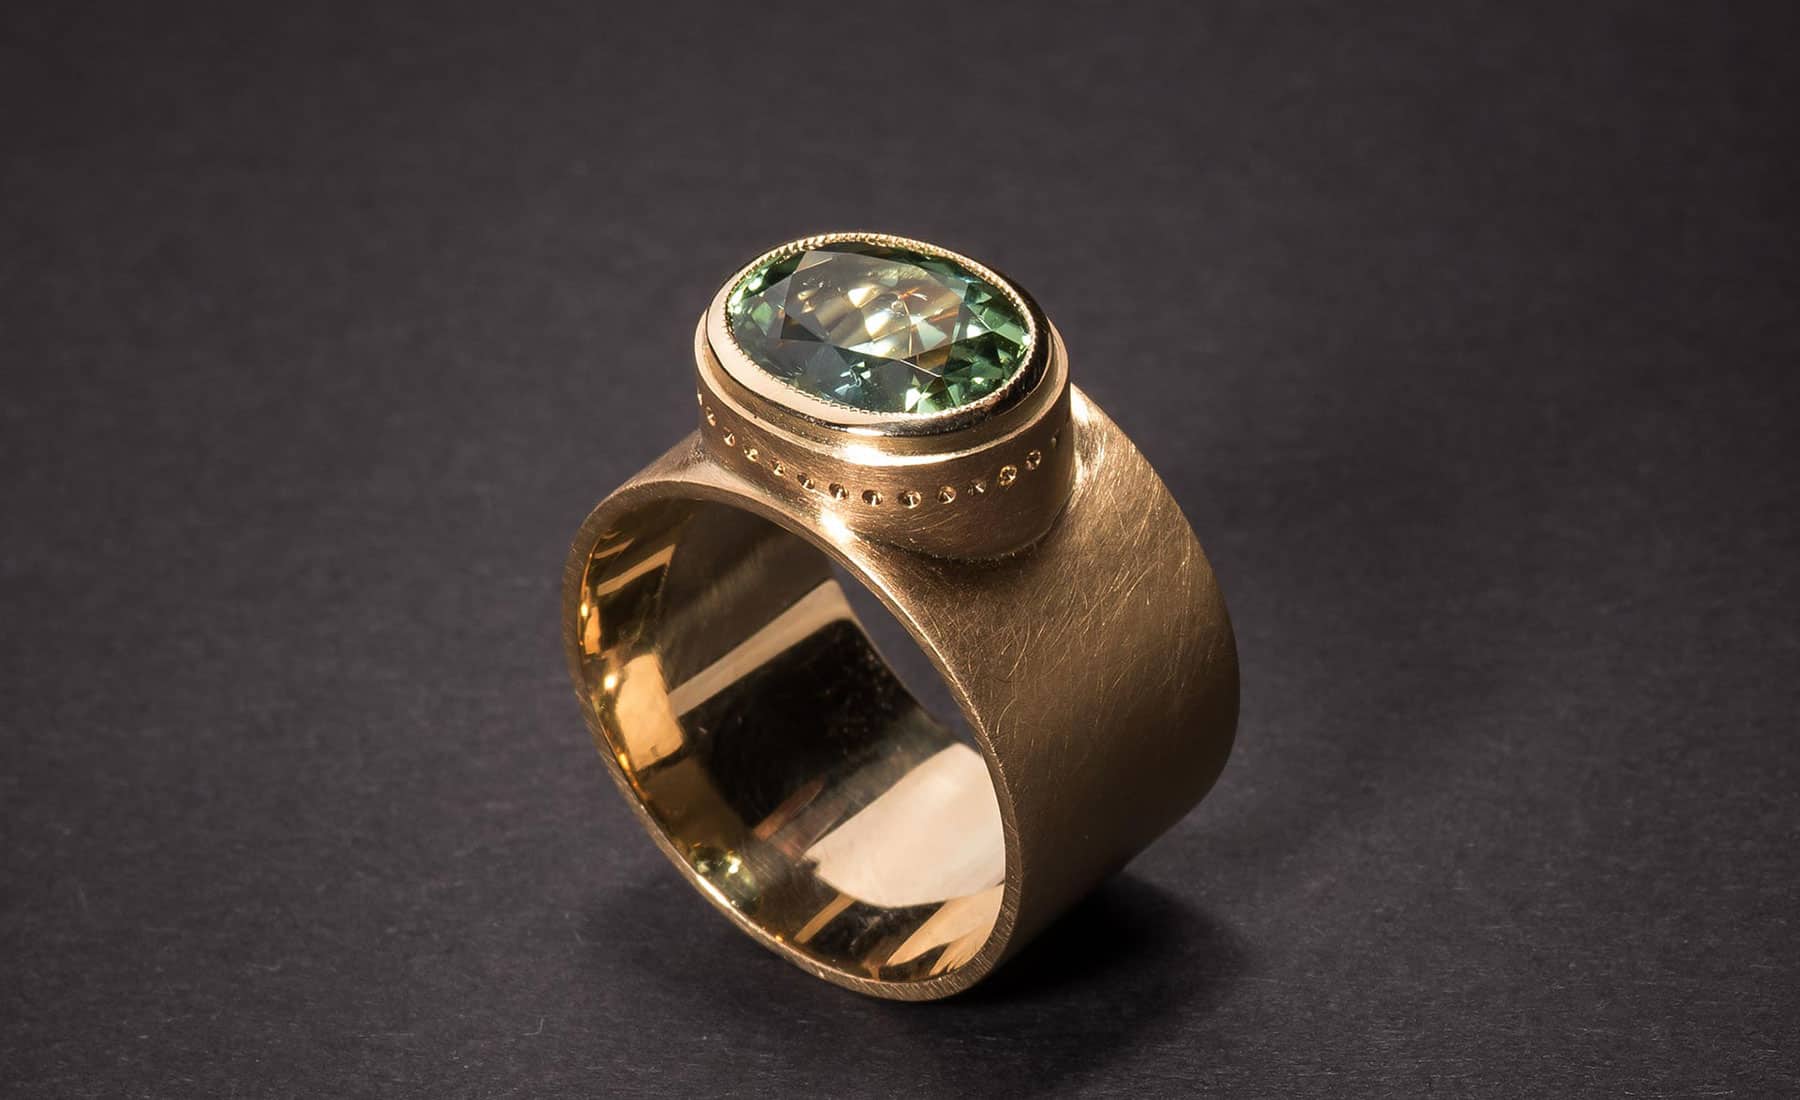 Kulta Ring in Gelbold 750 mit grünem facettiertem Turmalin 3.6ct